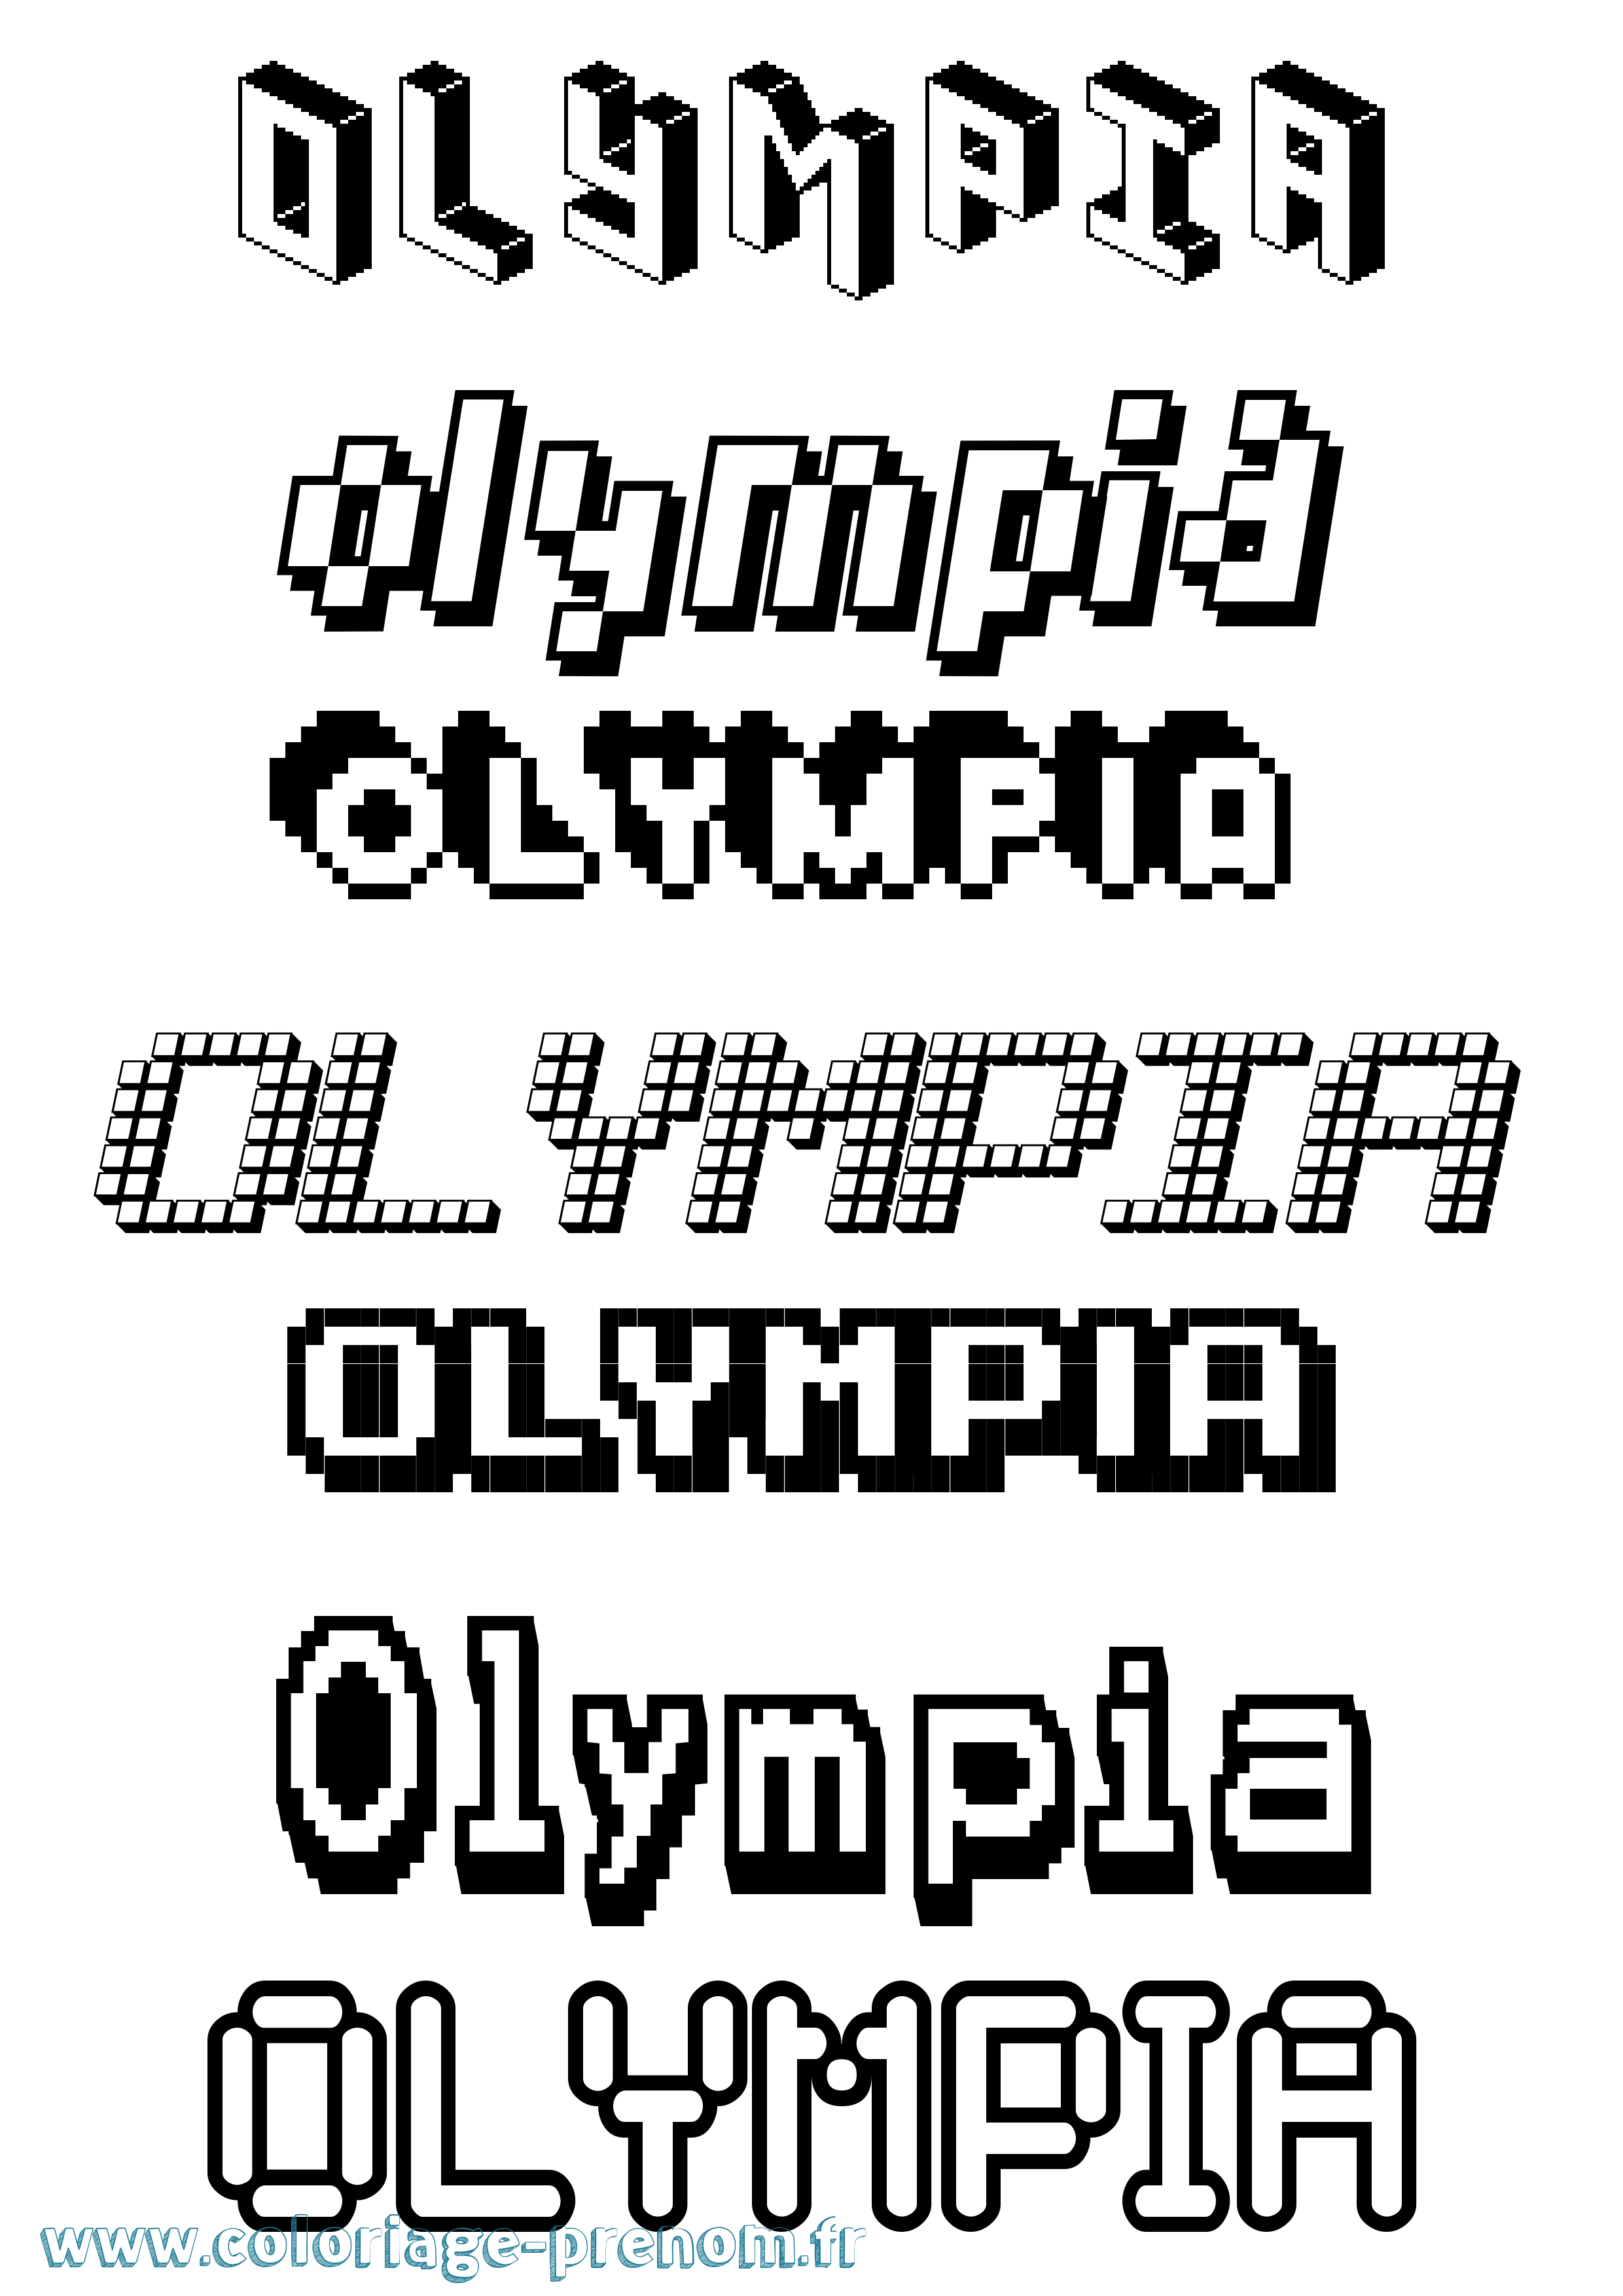 Coloriage prénom Olympia